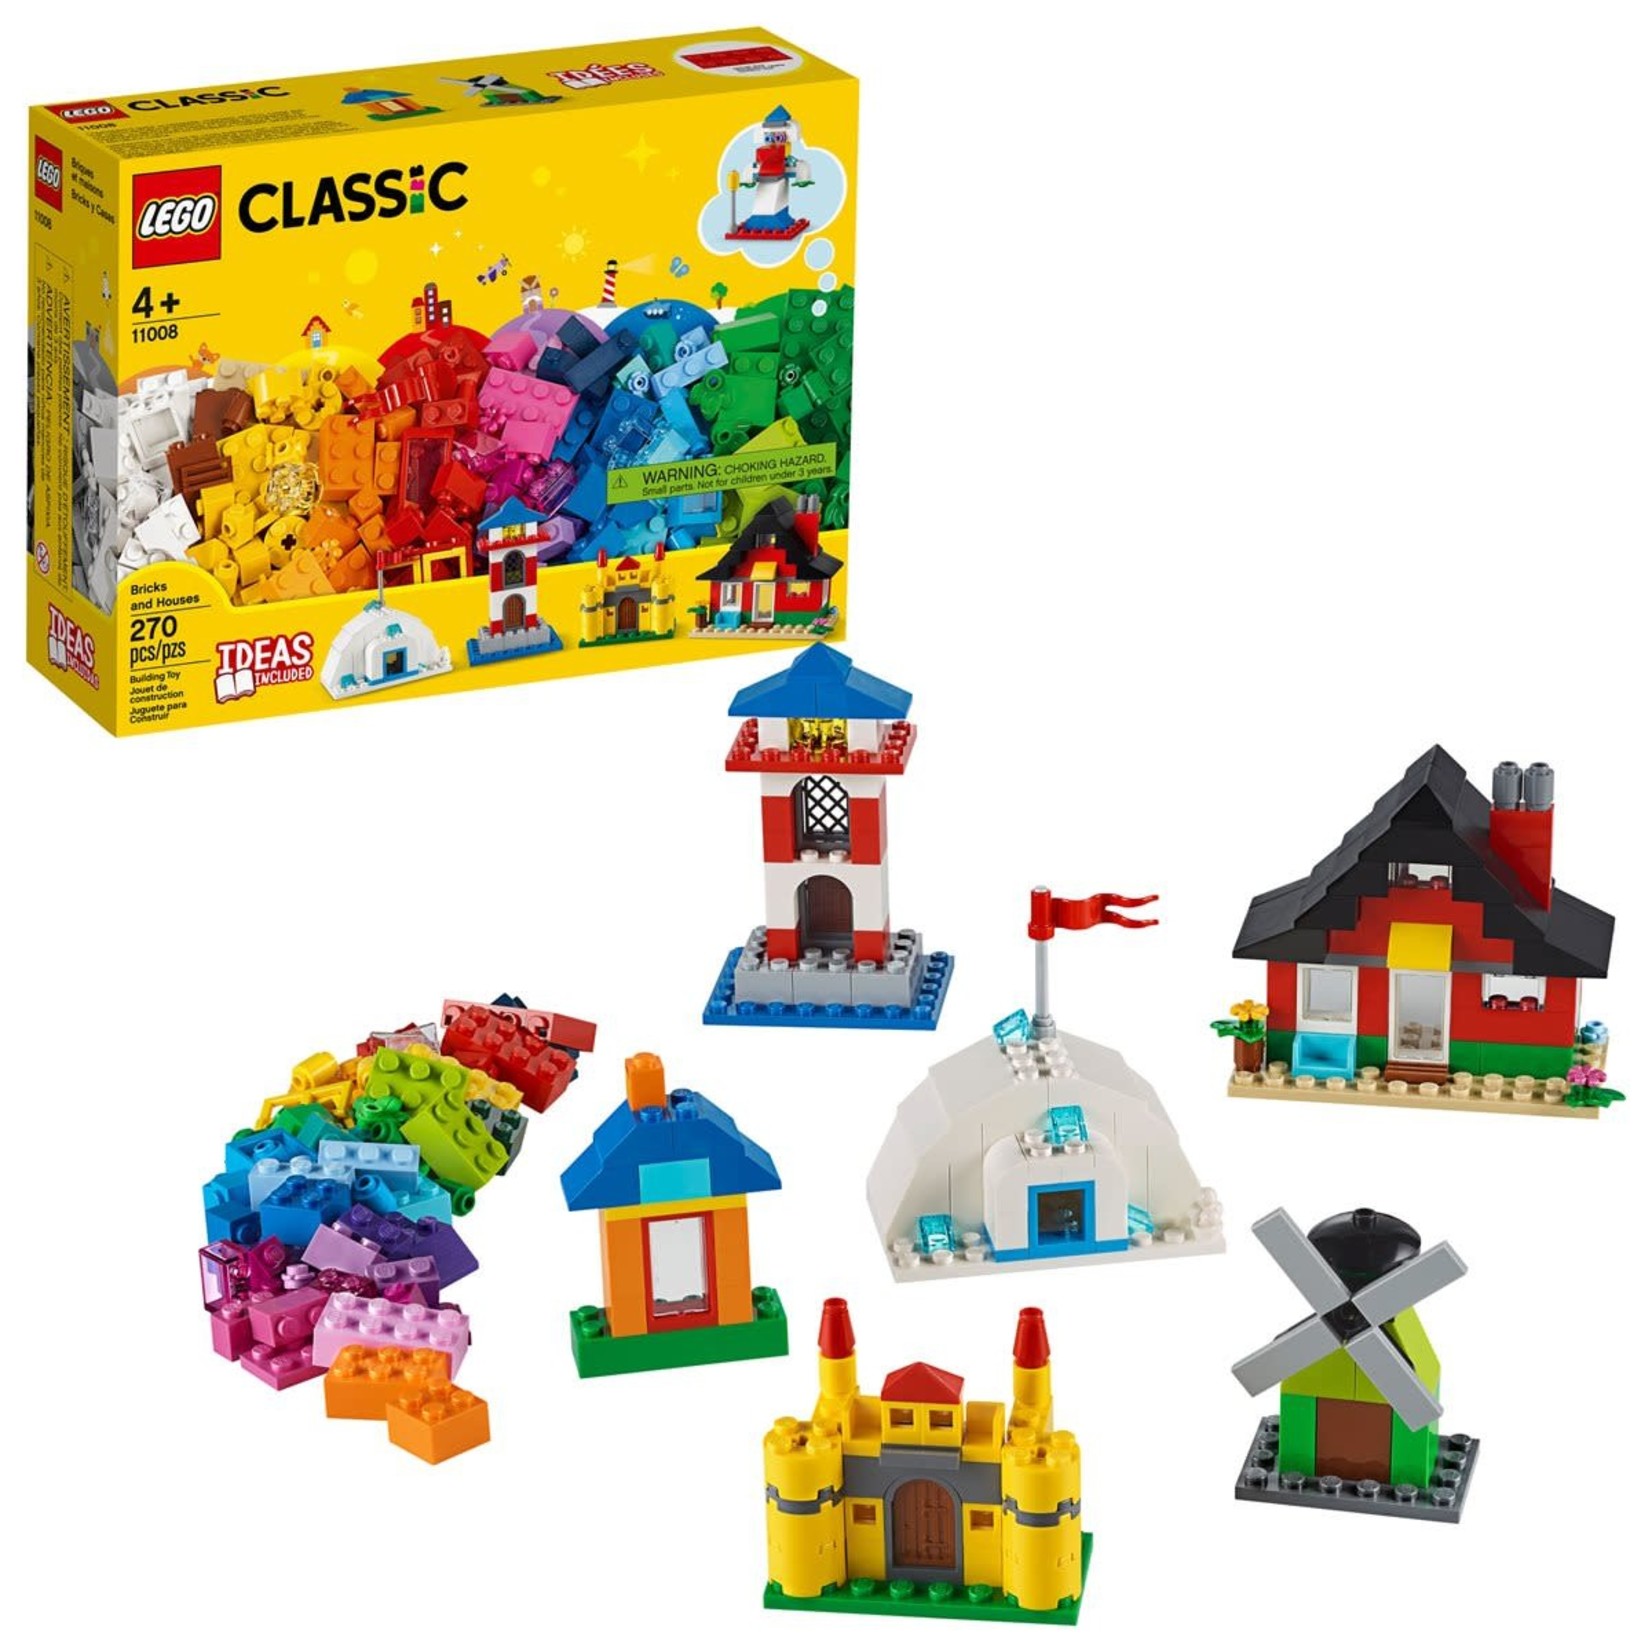 Lego Bricks and Houses - 270 Pcs.